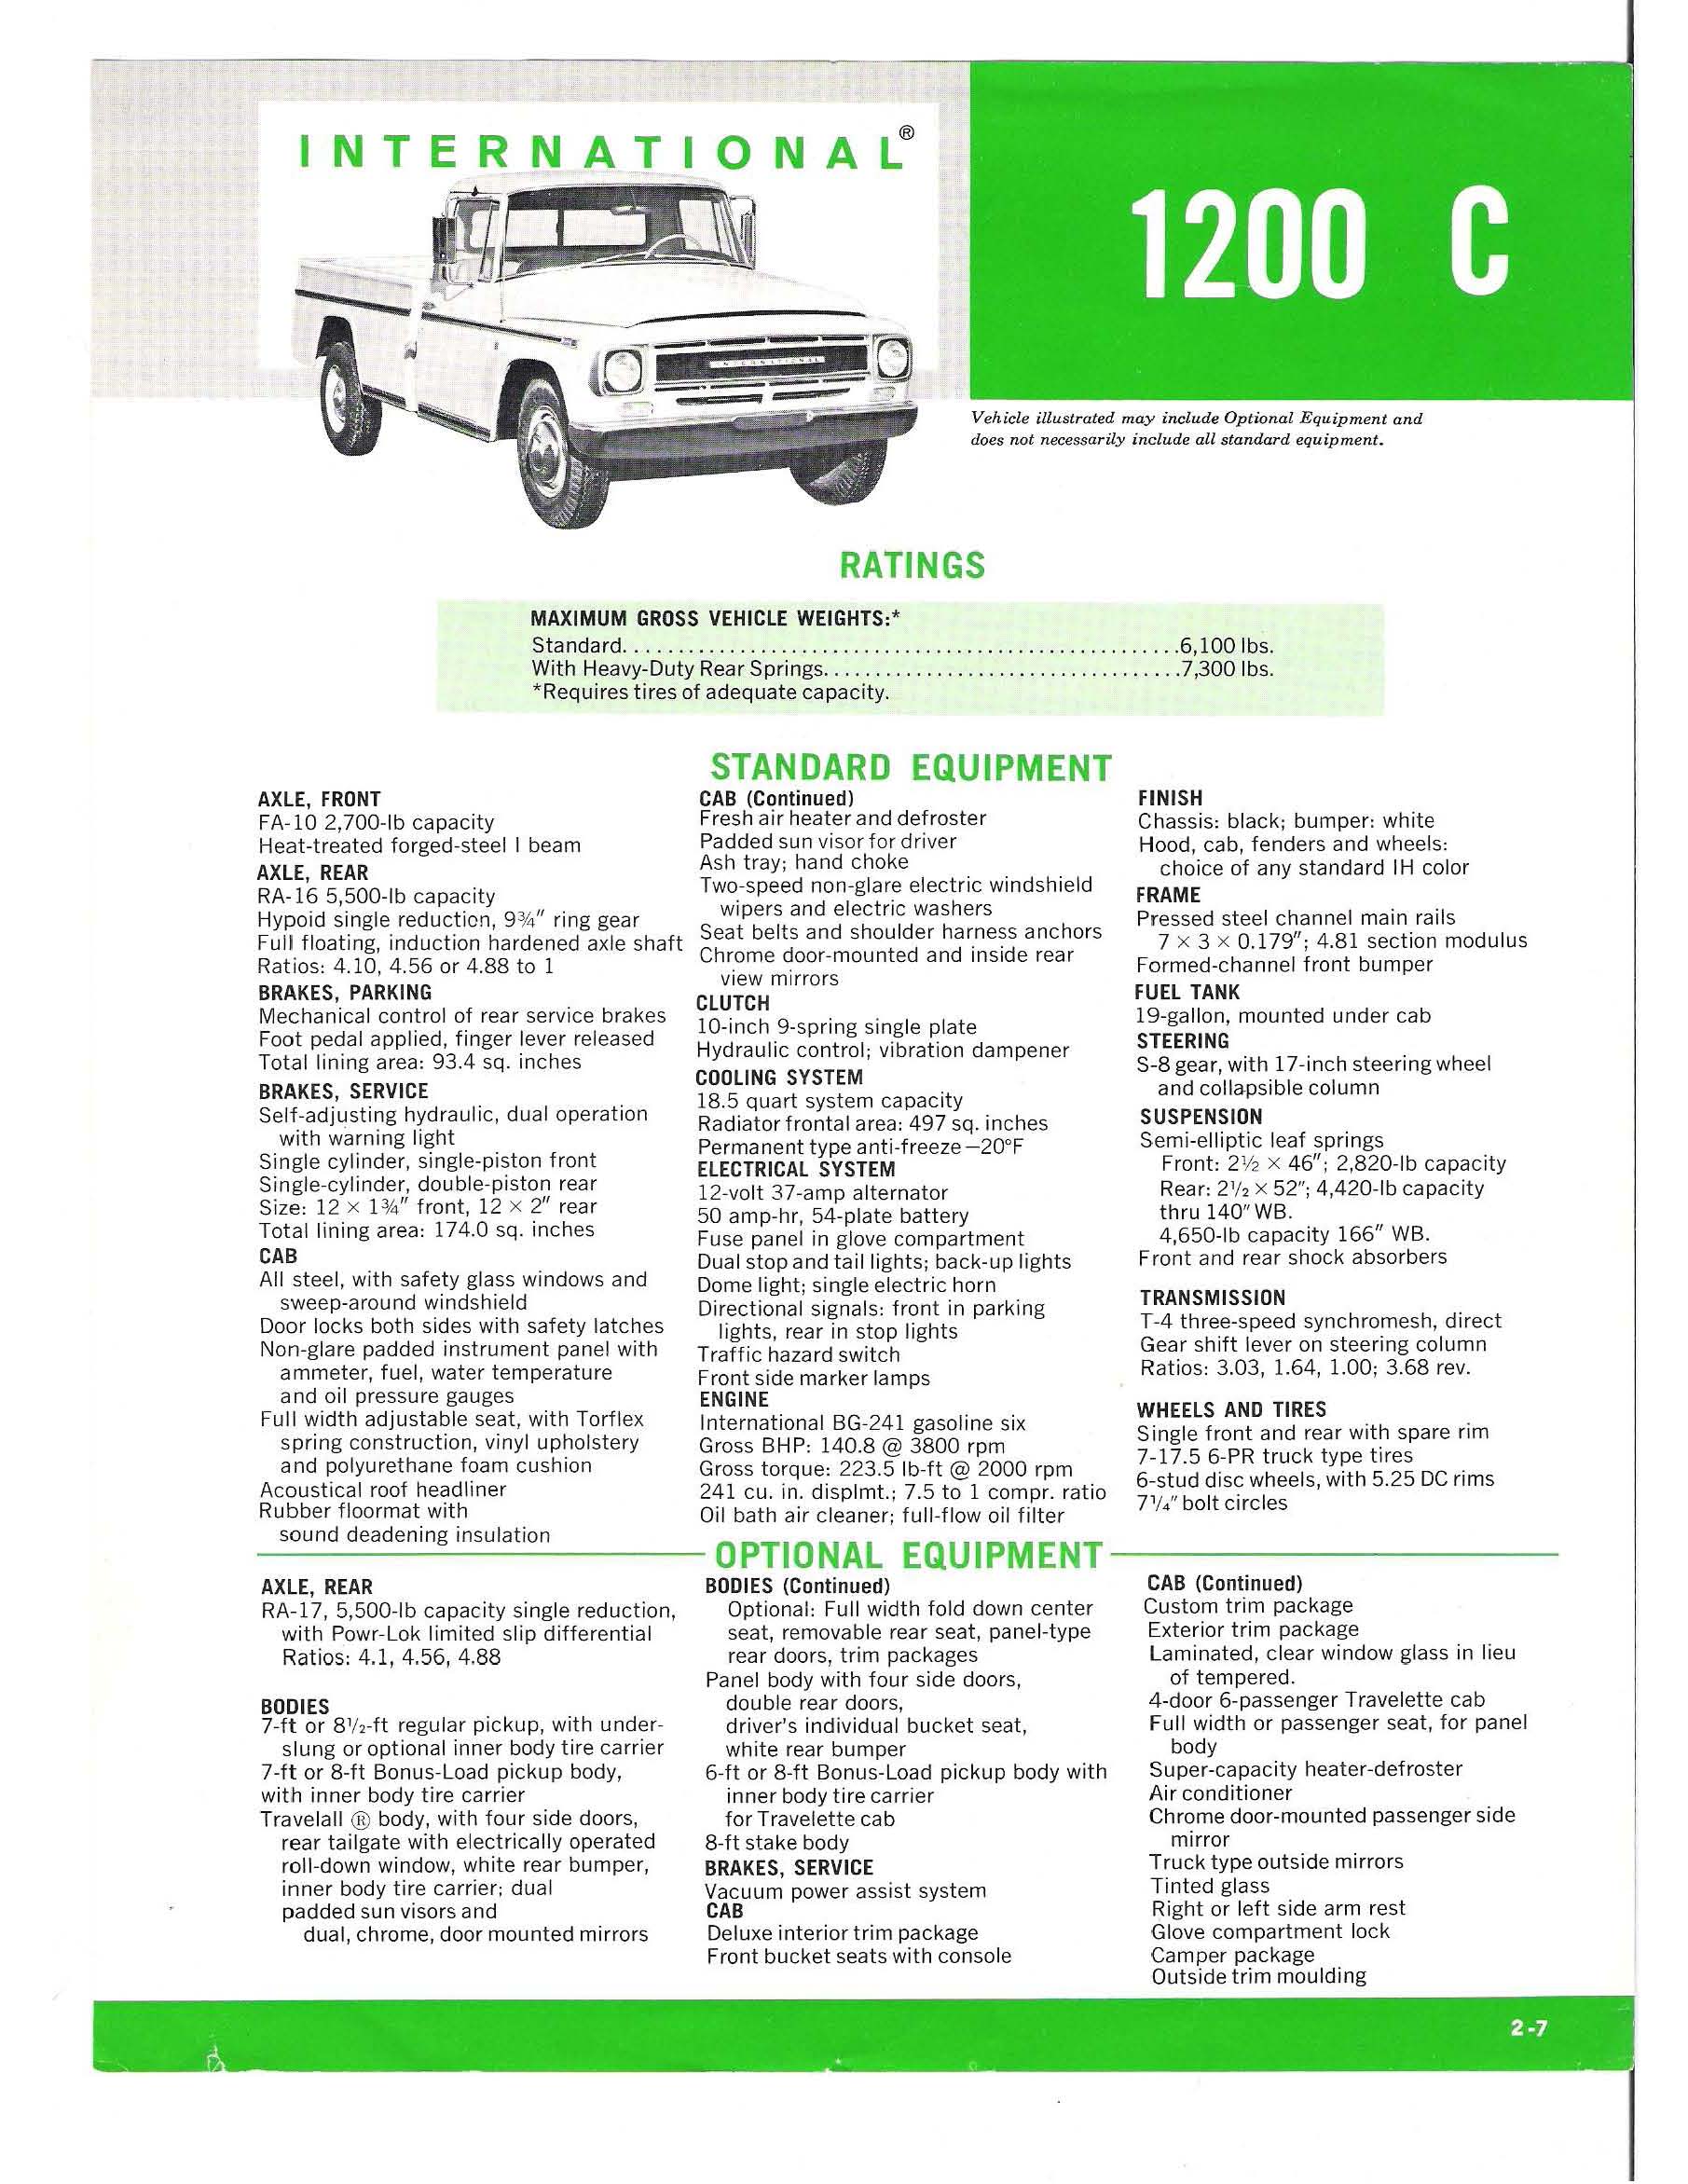 1968 International 1200C Folder Page 2